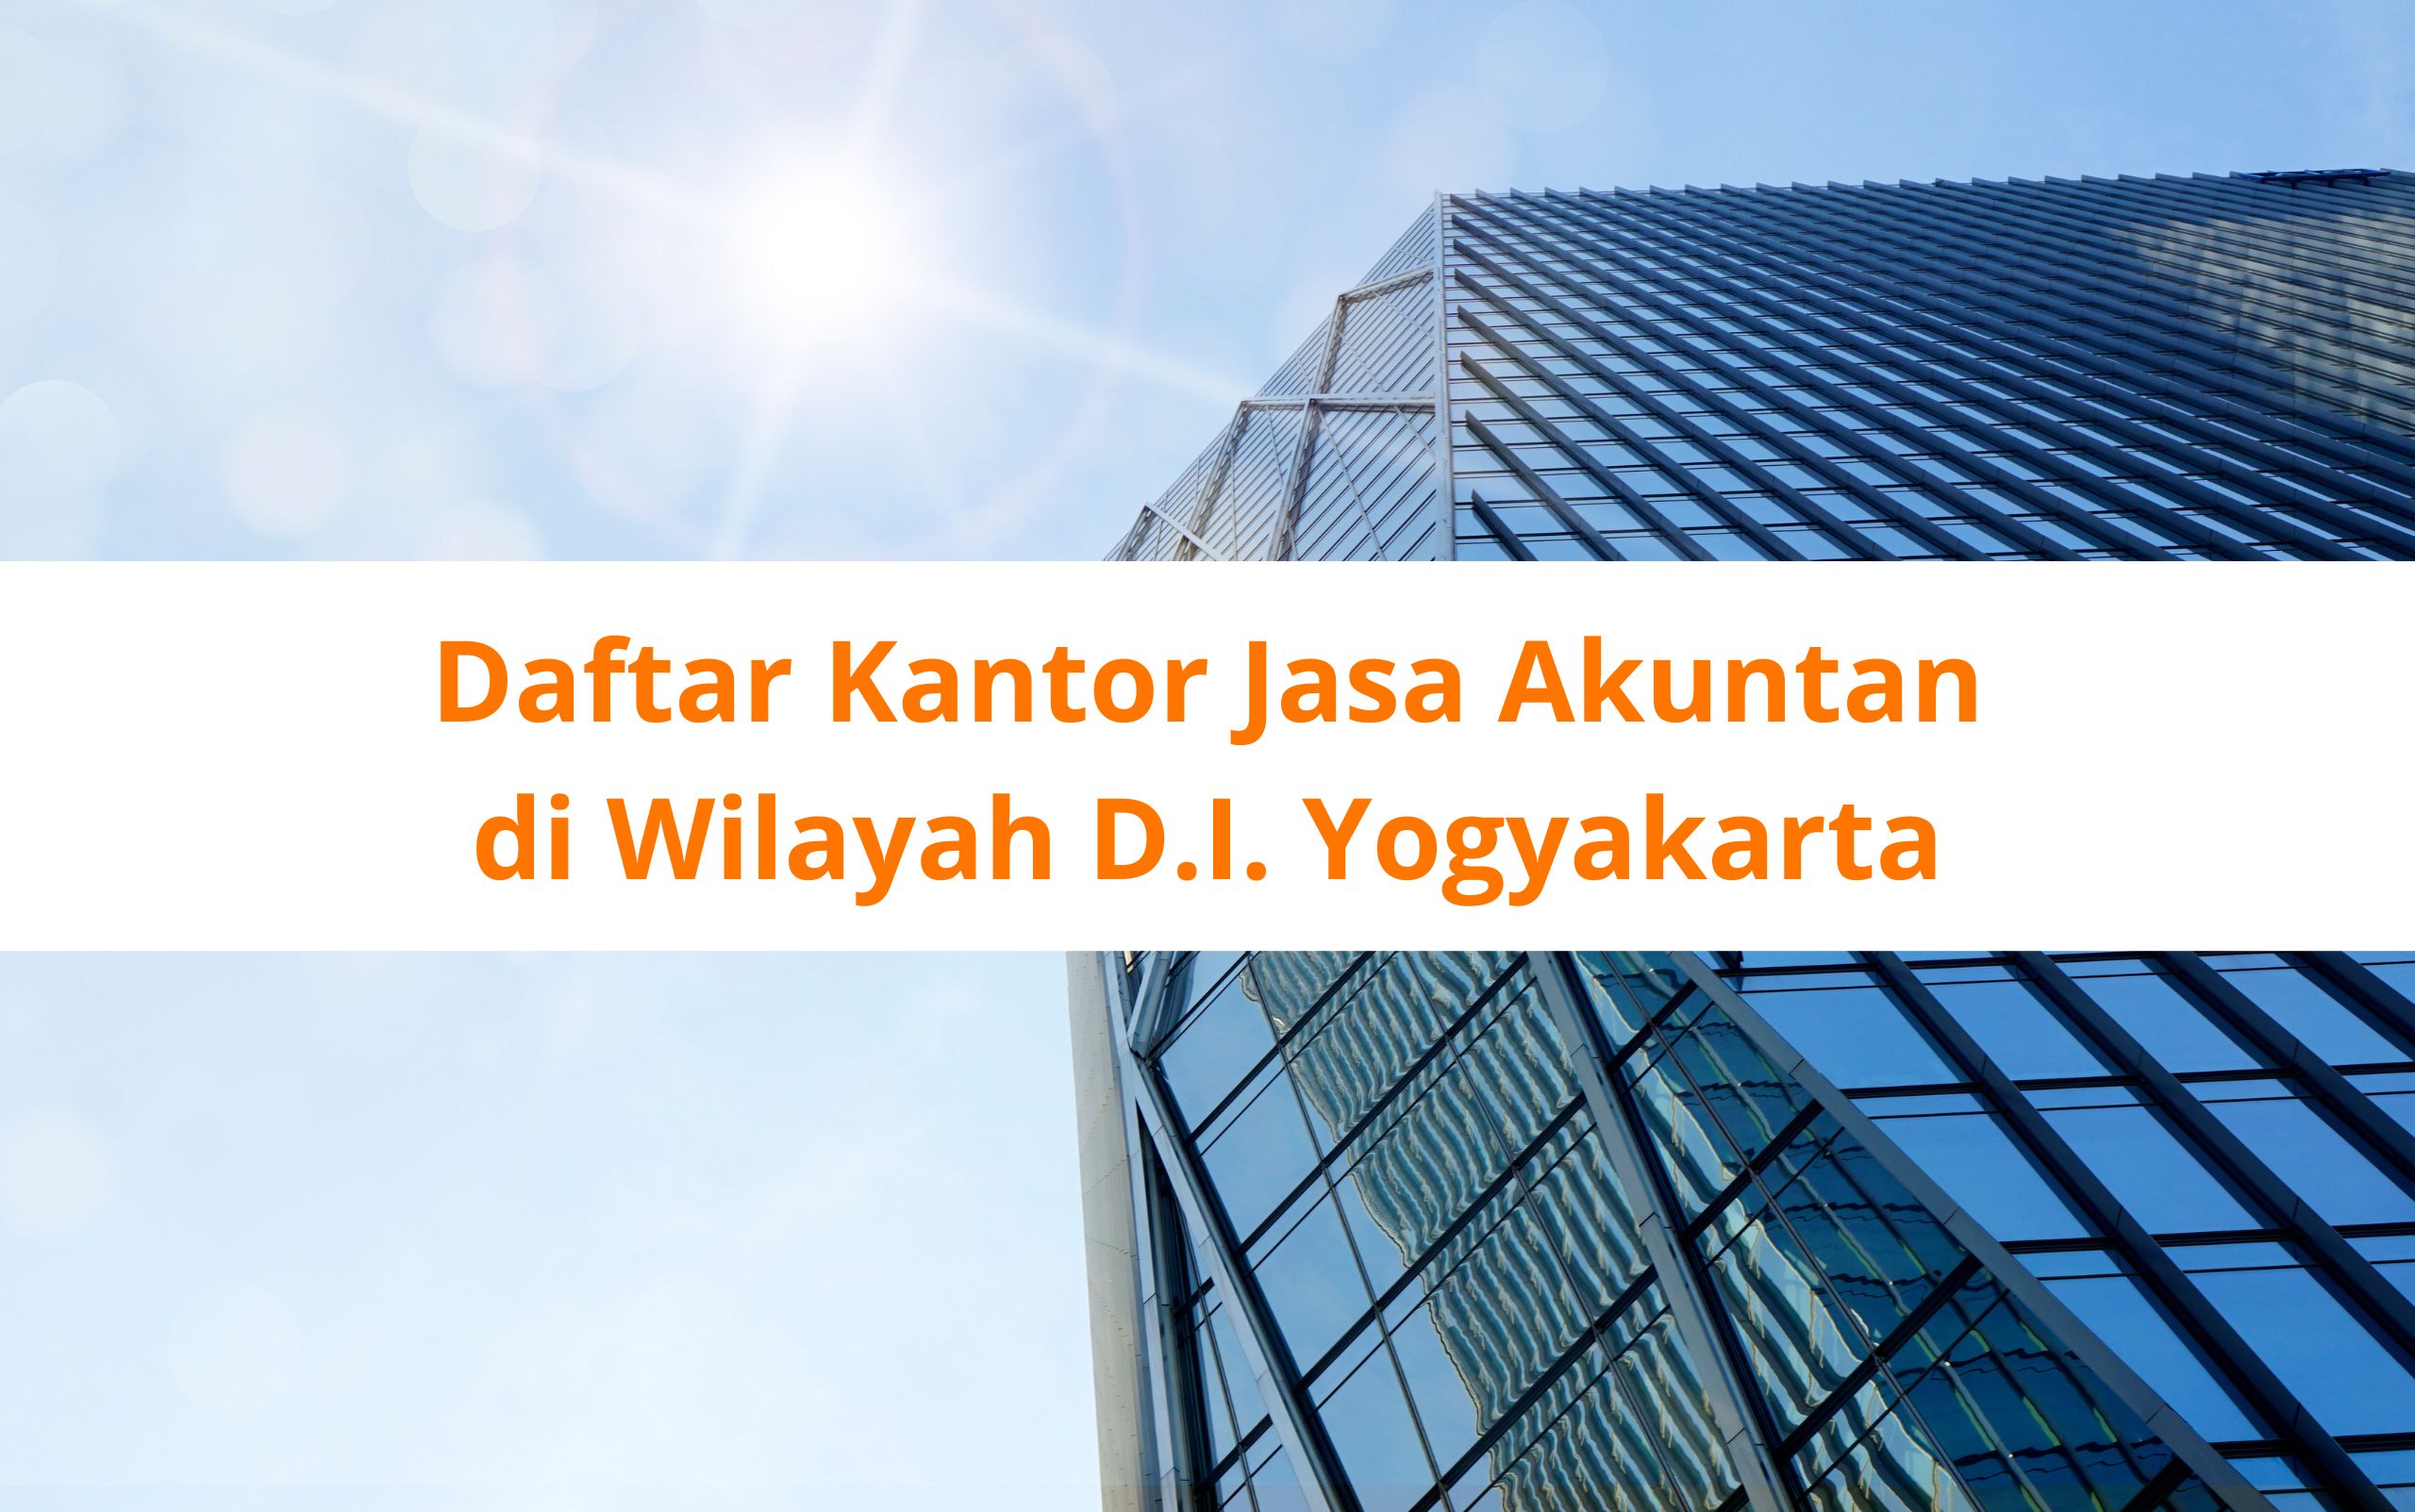 Daftar Kantor Jasa Akuntan (KJA) yang Ada di D.I. Yogyakarta